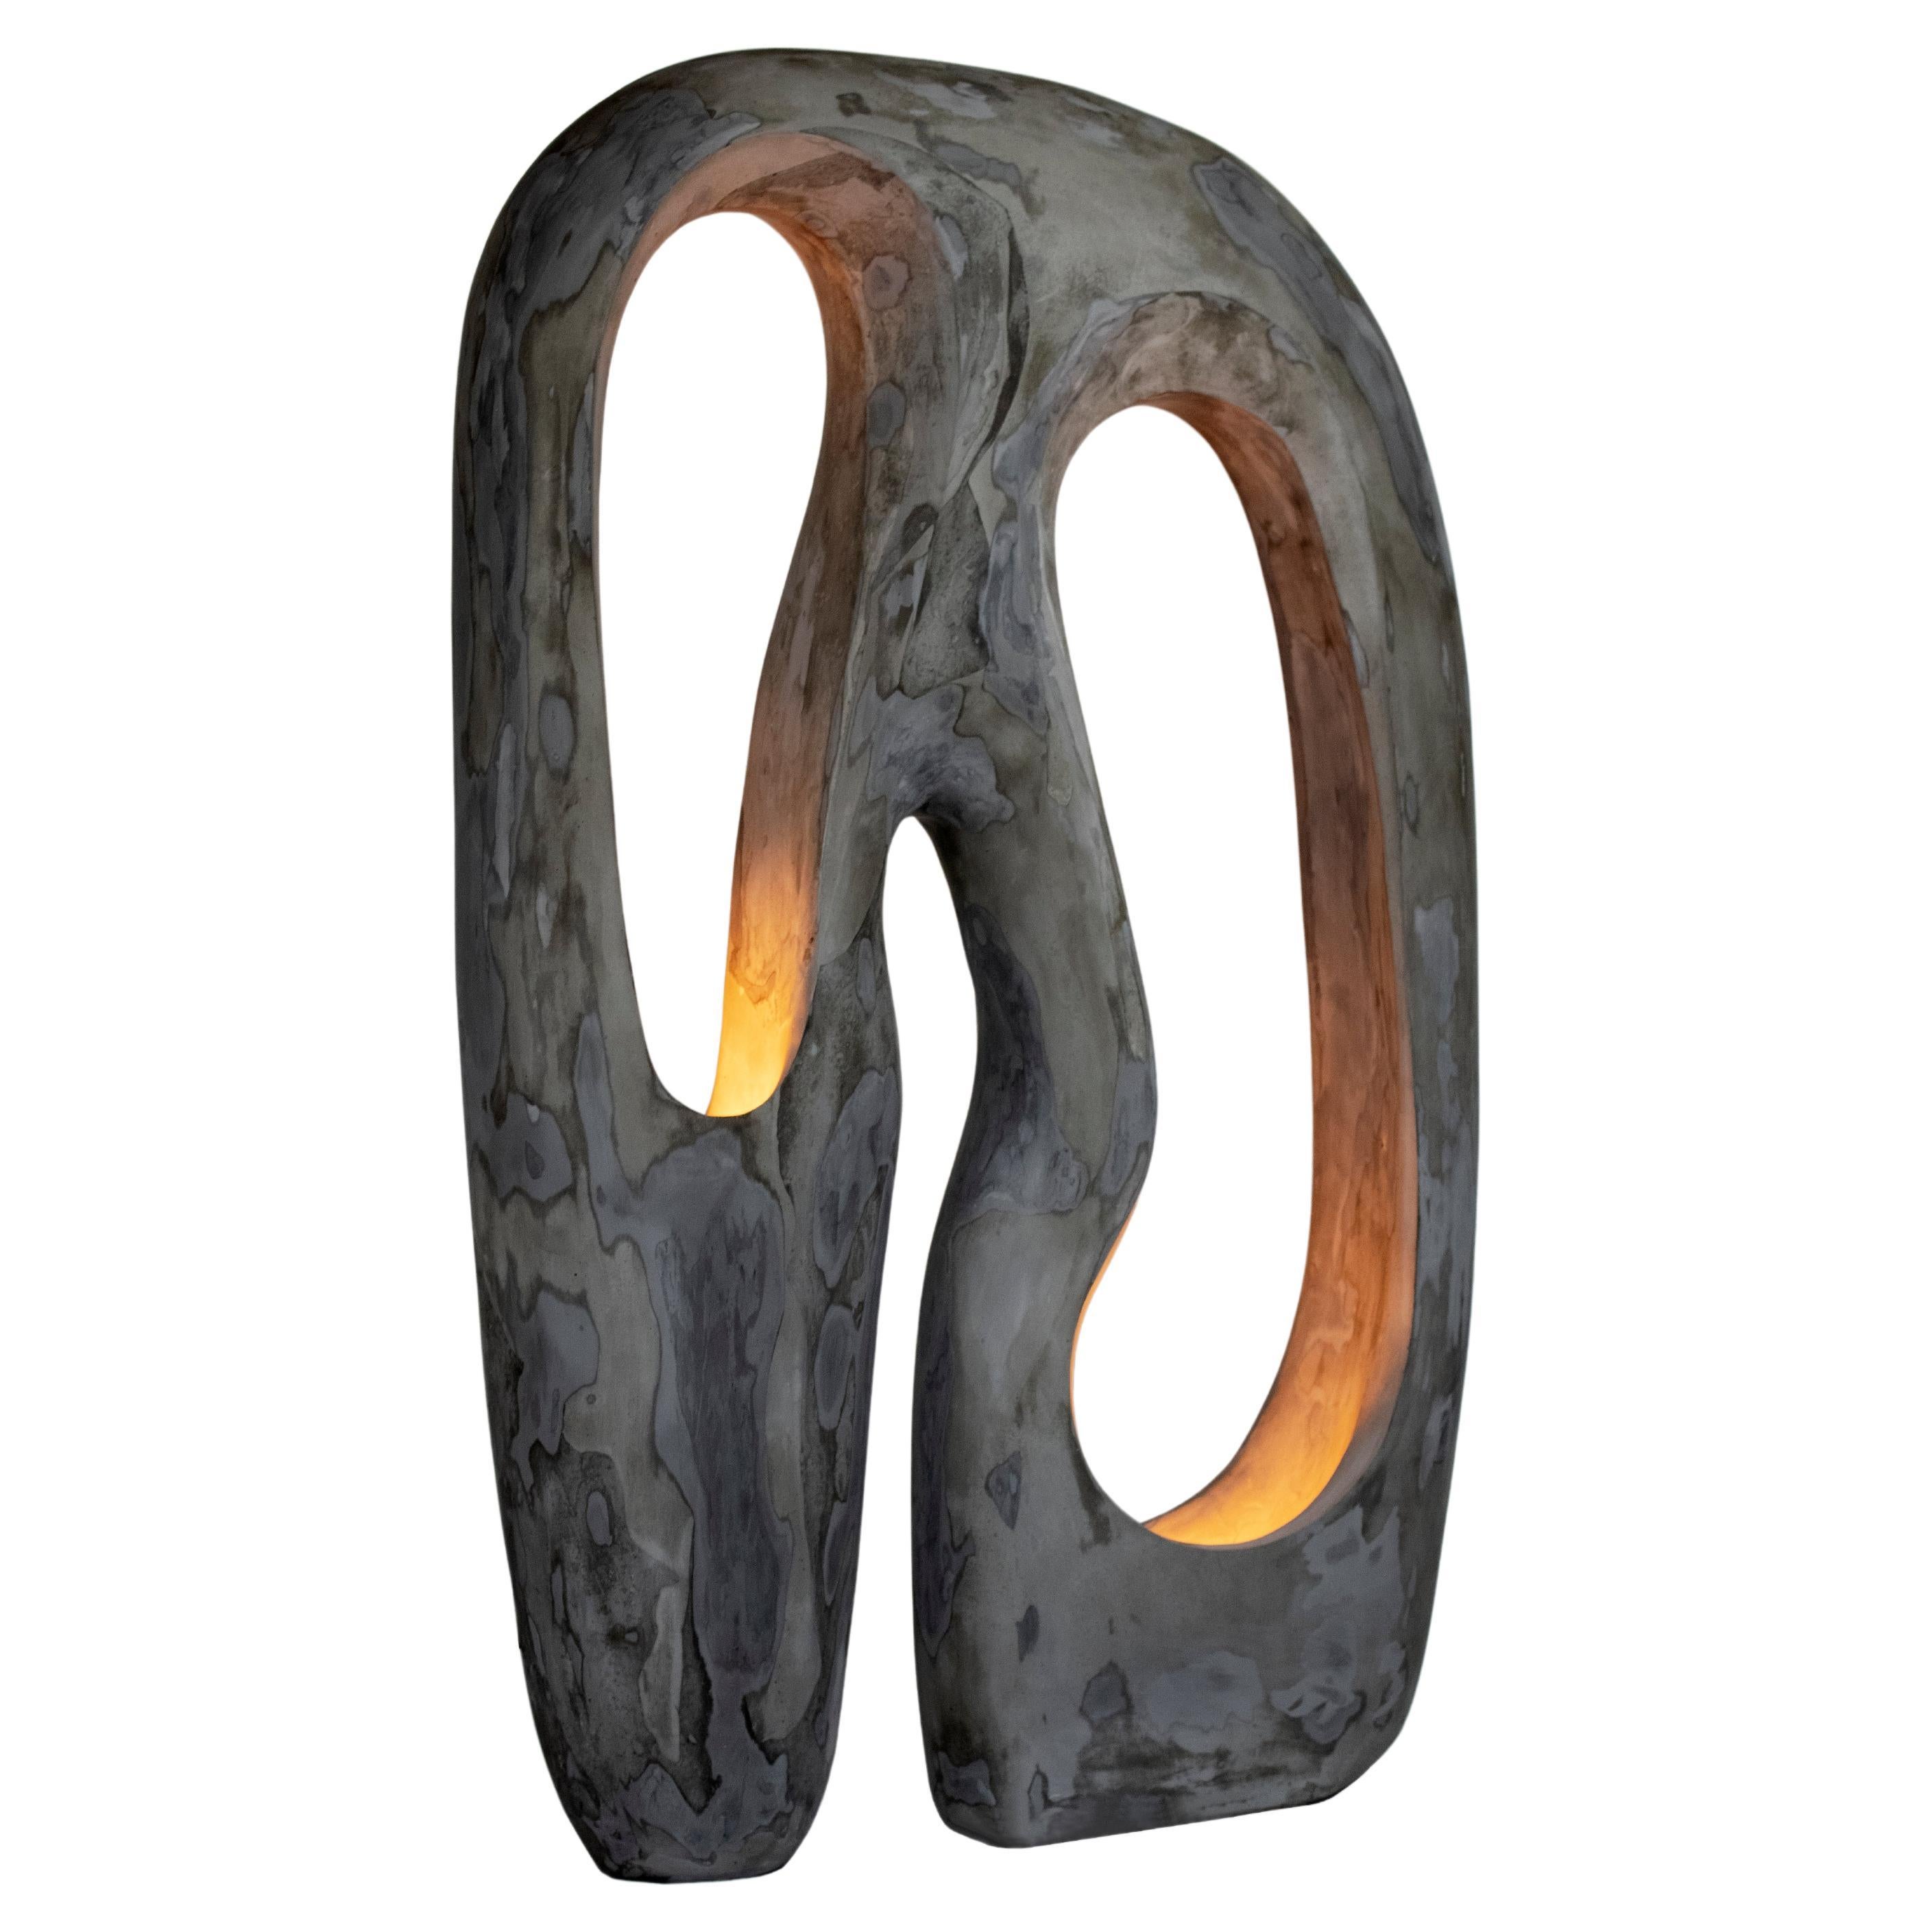 Lampadaire sculptural contemporain Longing, design de collection organique par AOAO